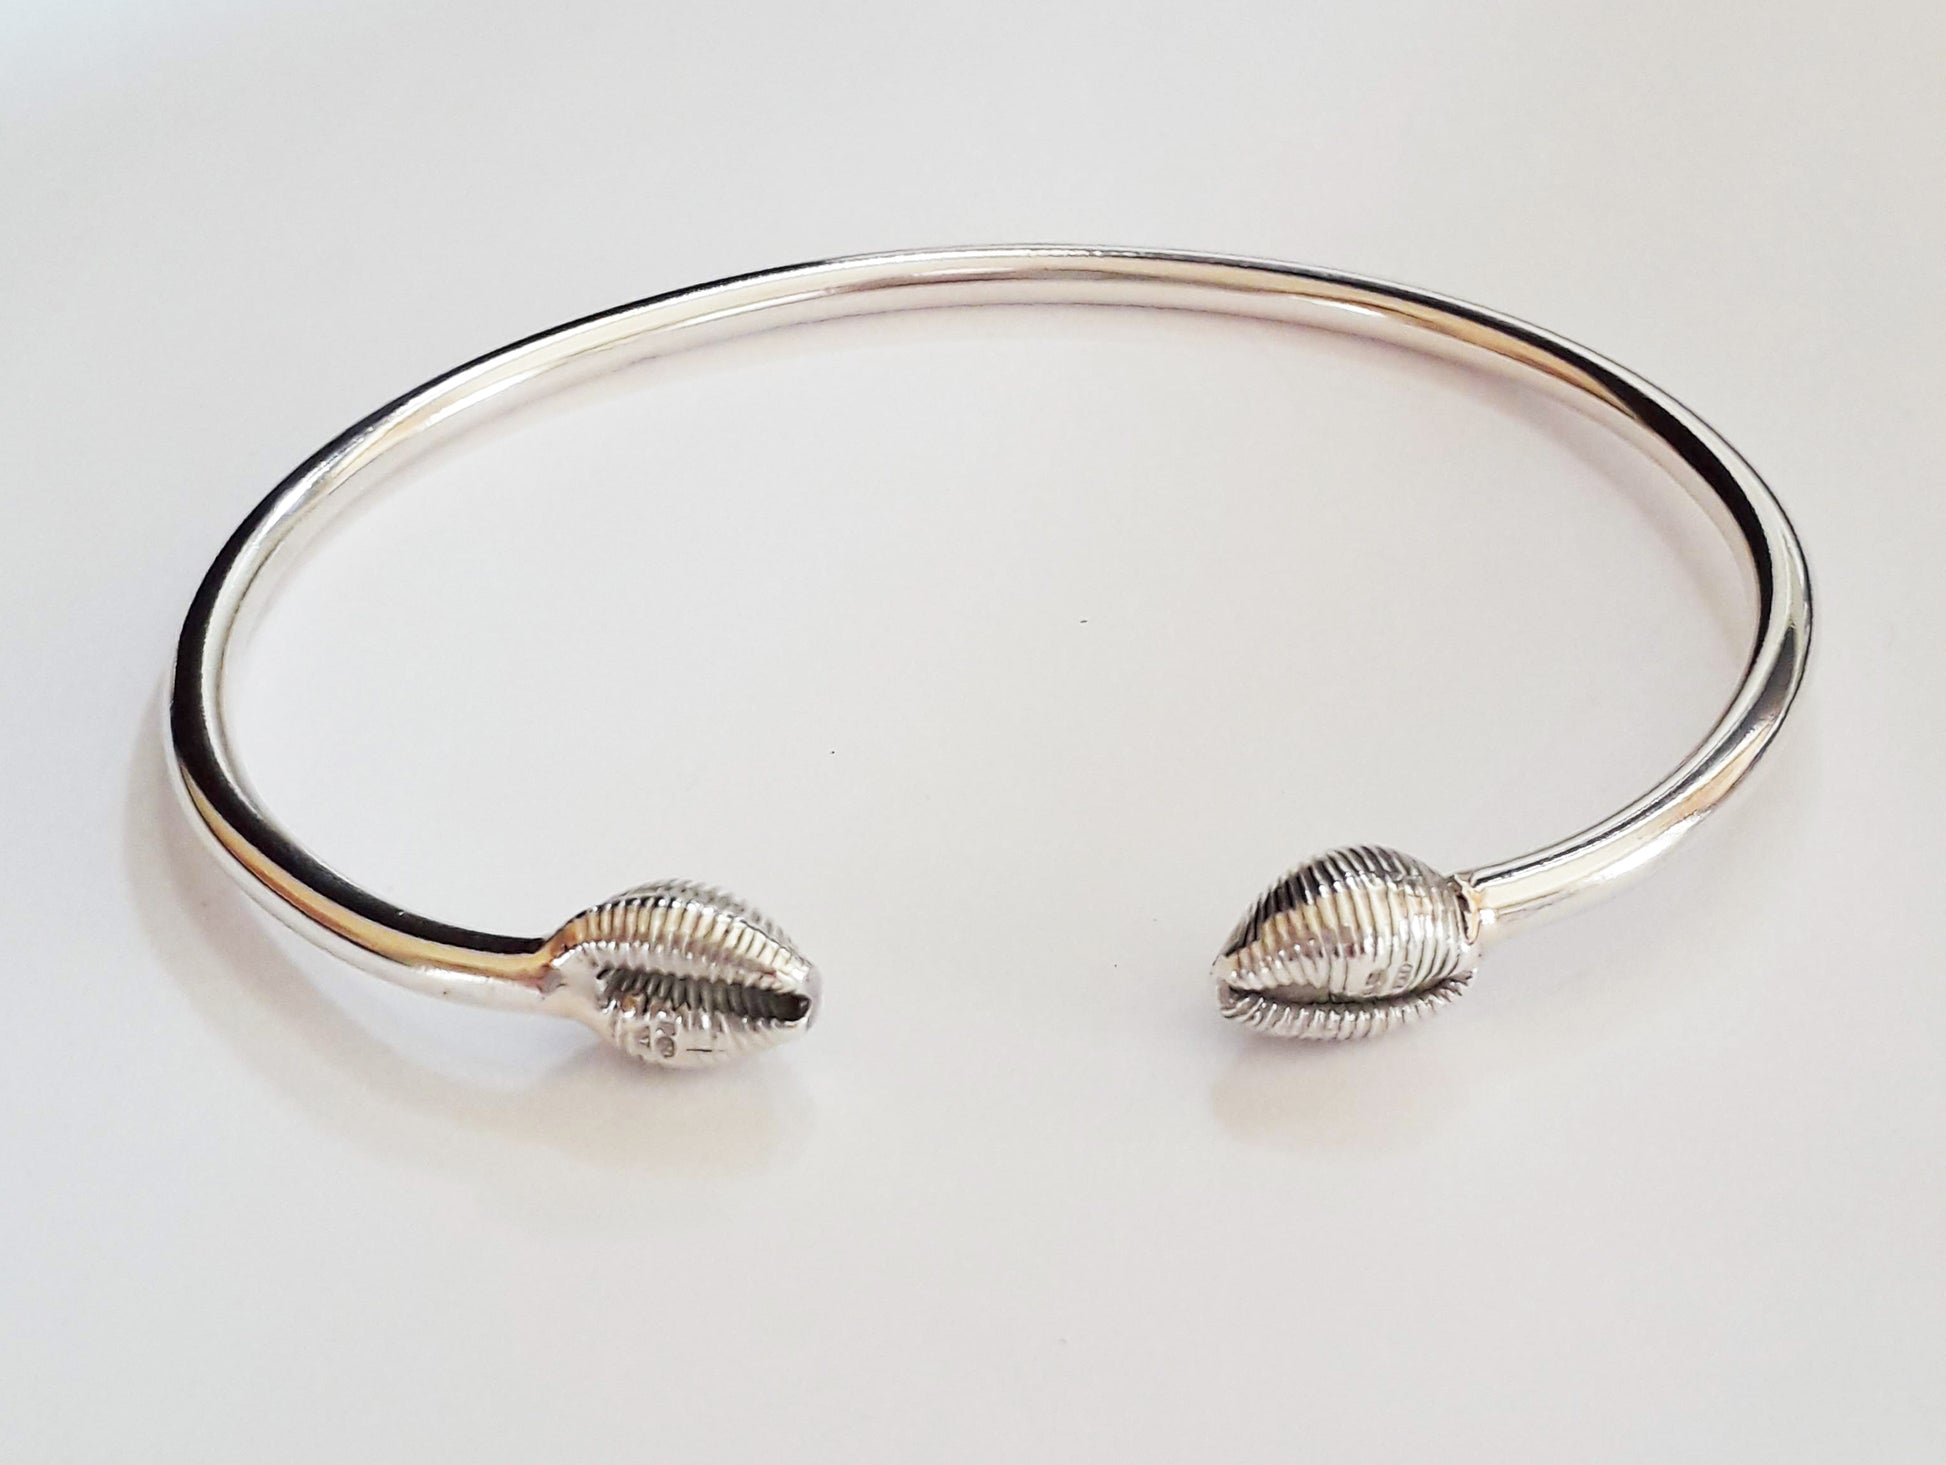 Cowrie shell cuff bracelet